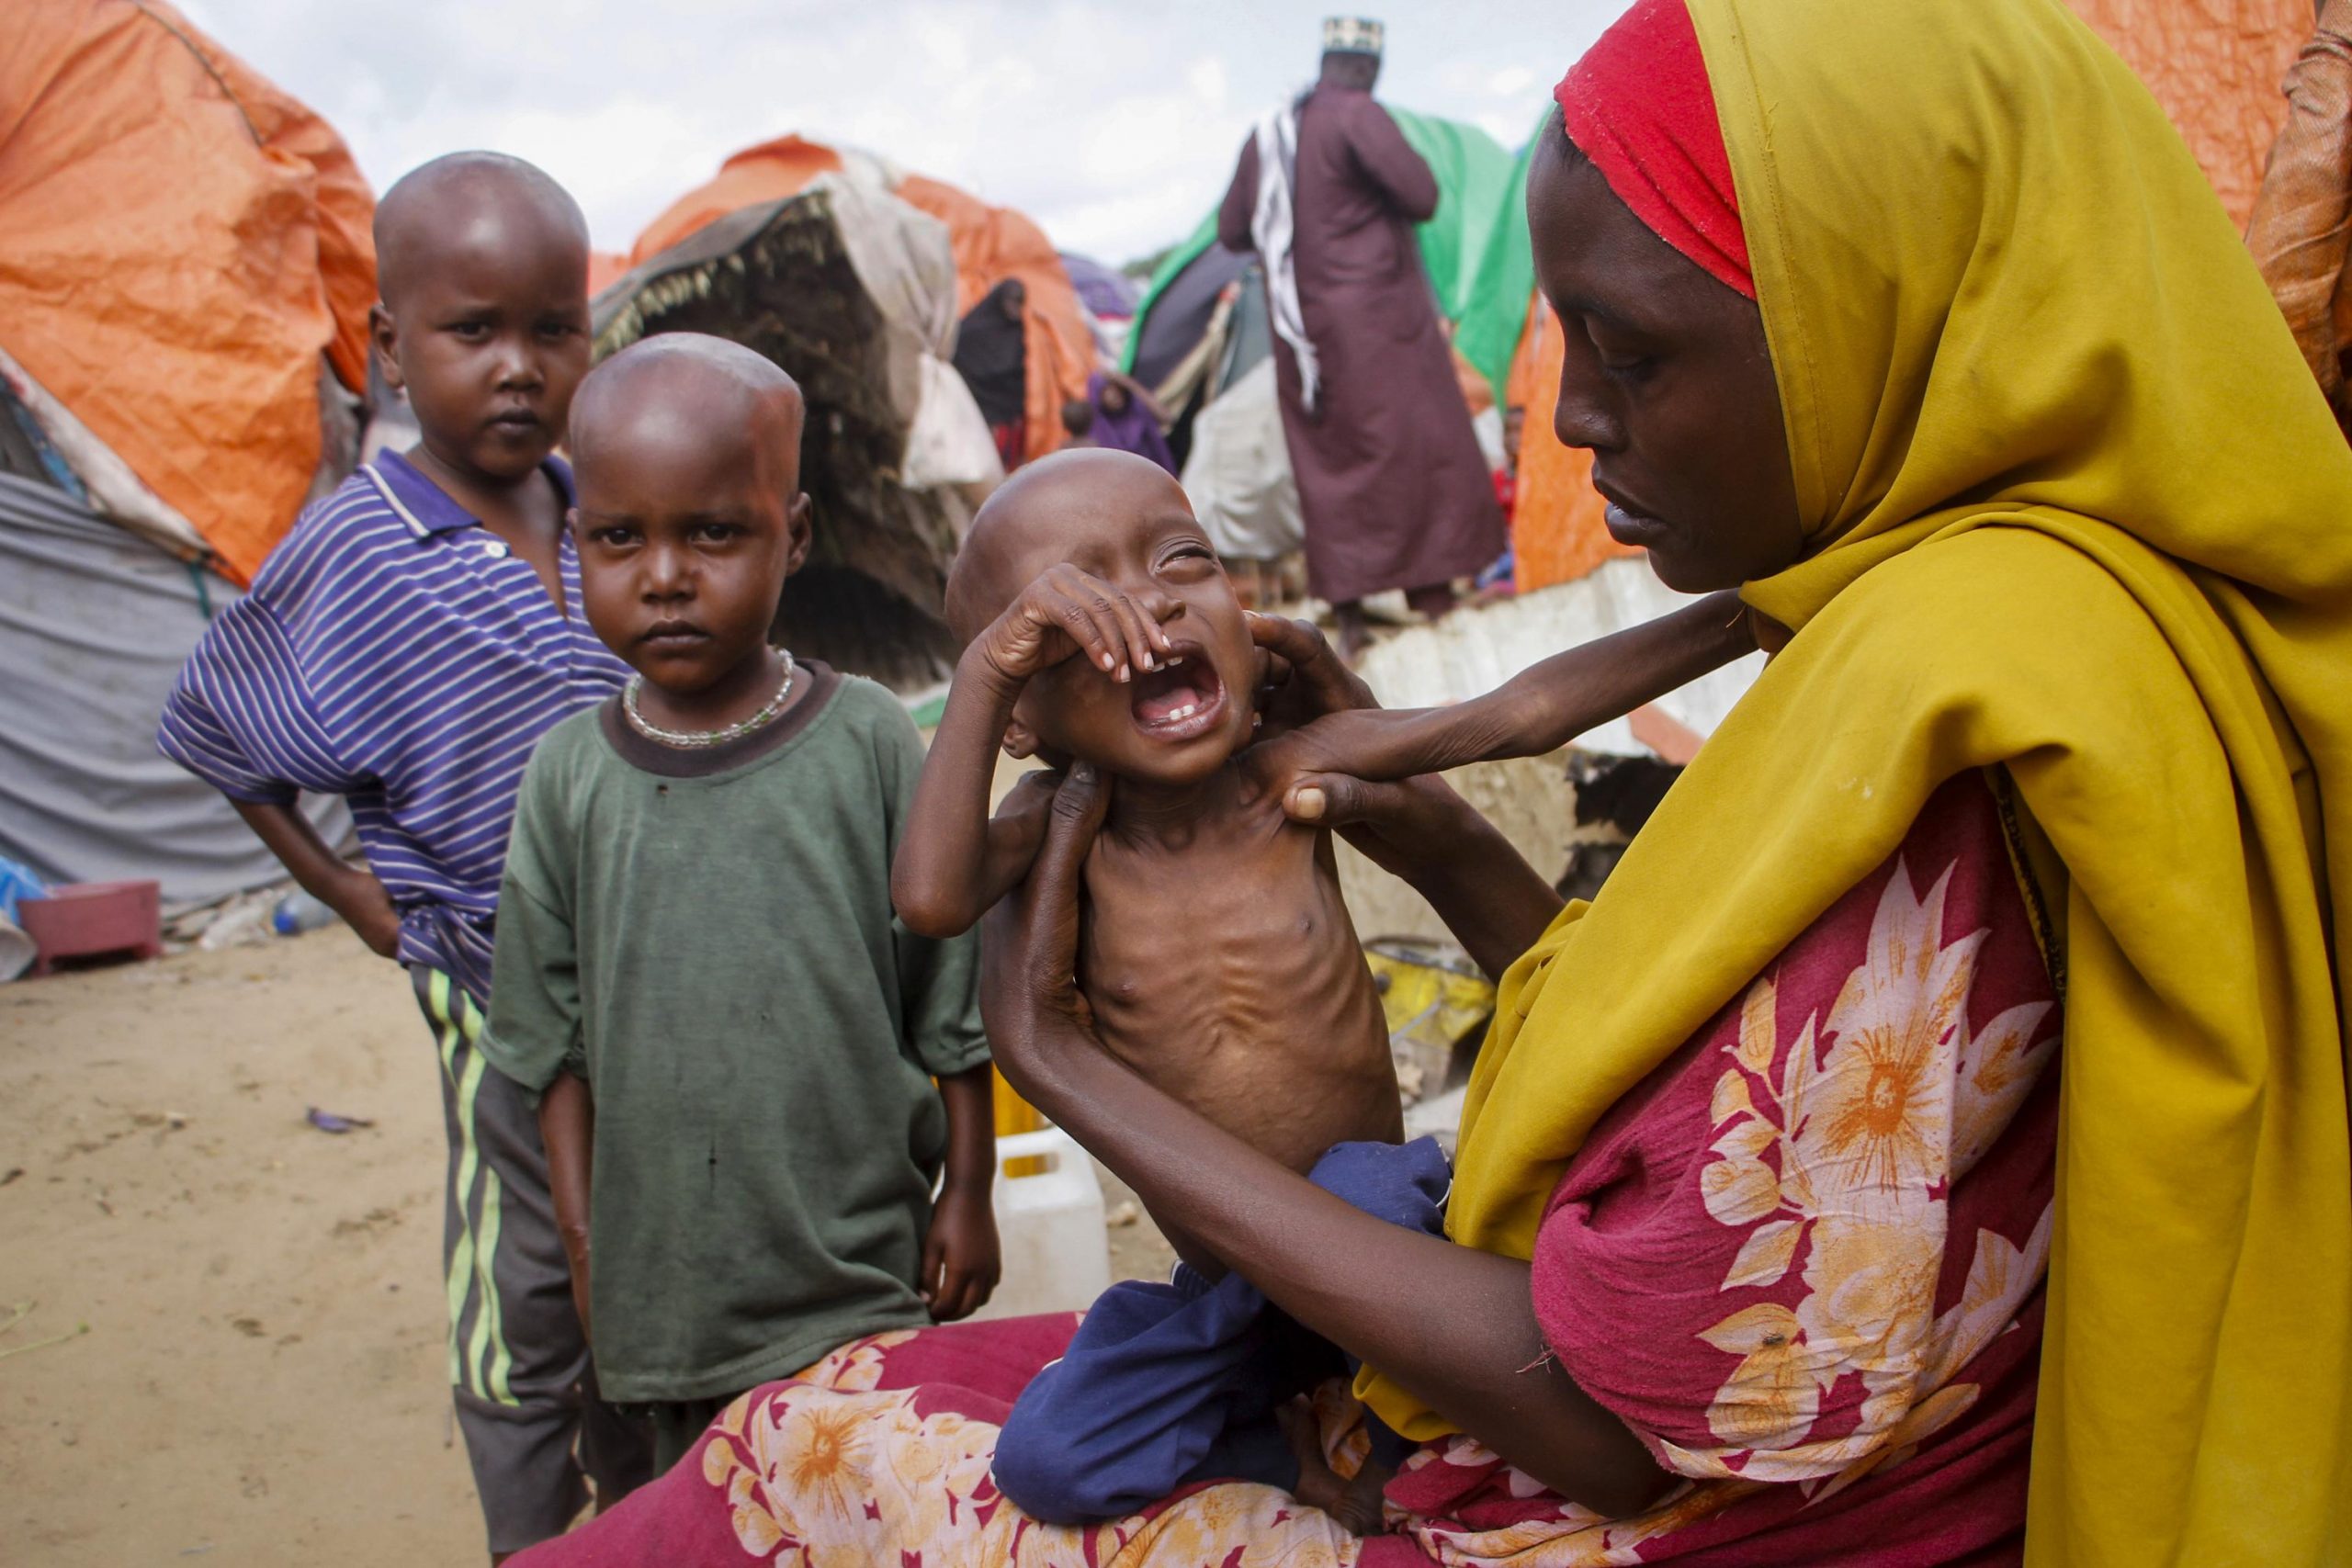 UNICEF: Hundreds of Children Have Died of Starvation in Somalia